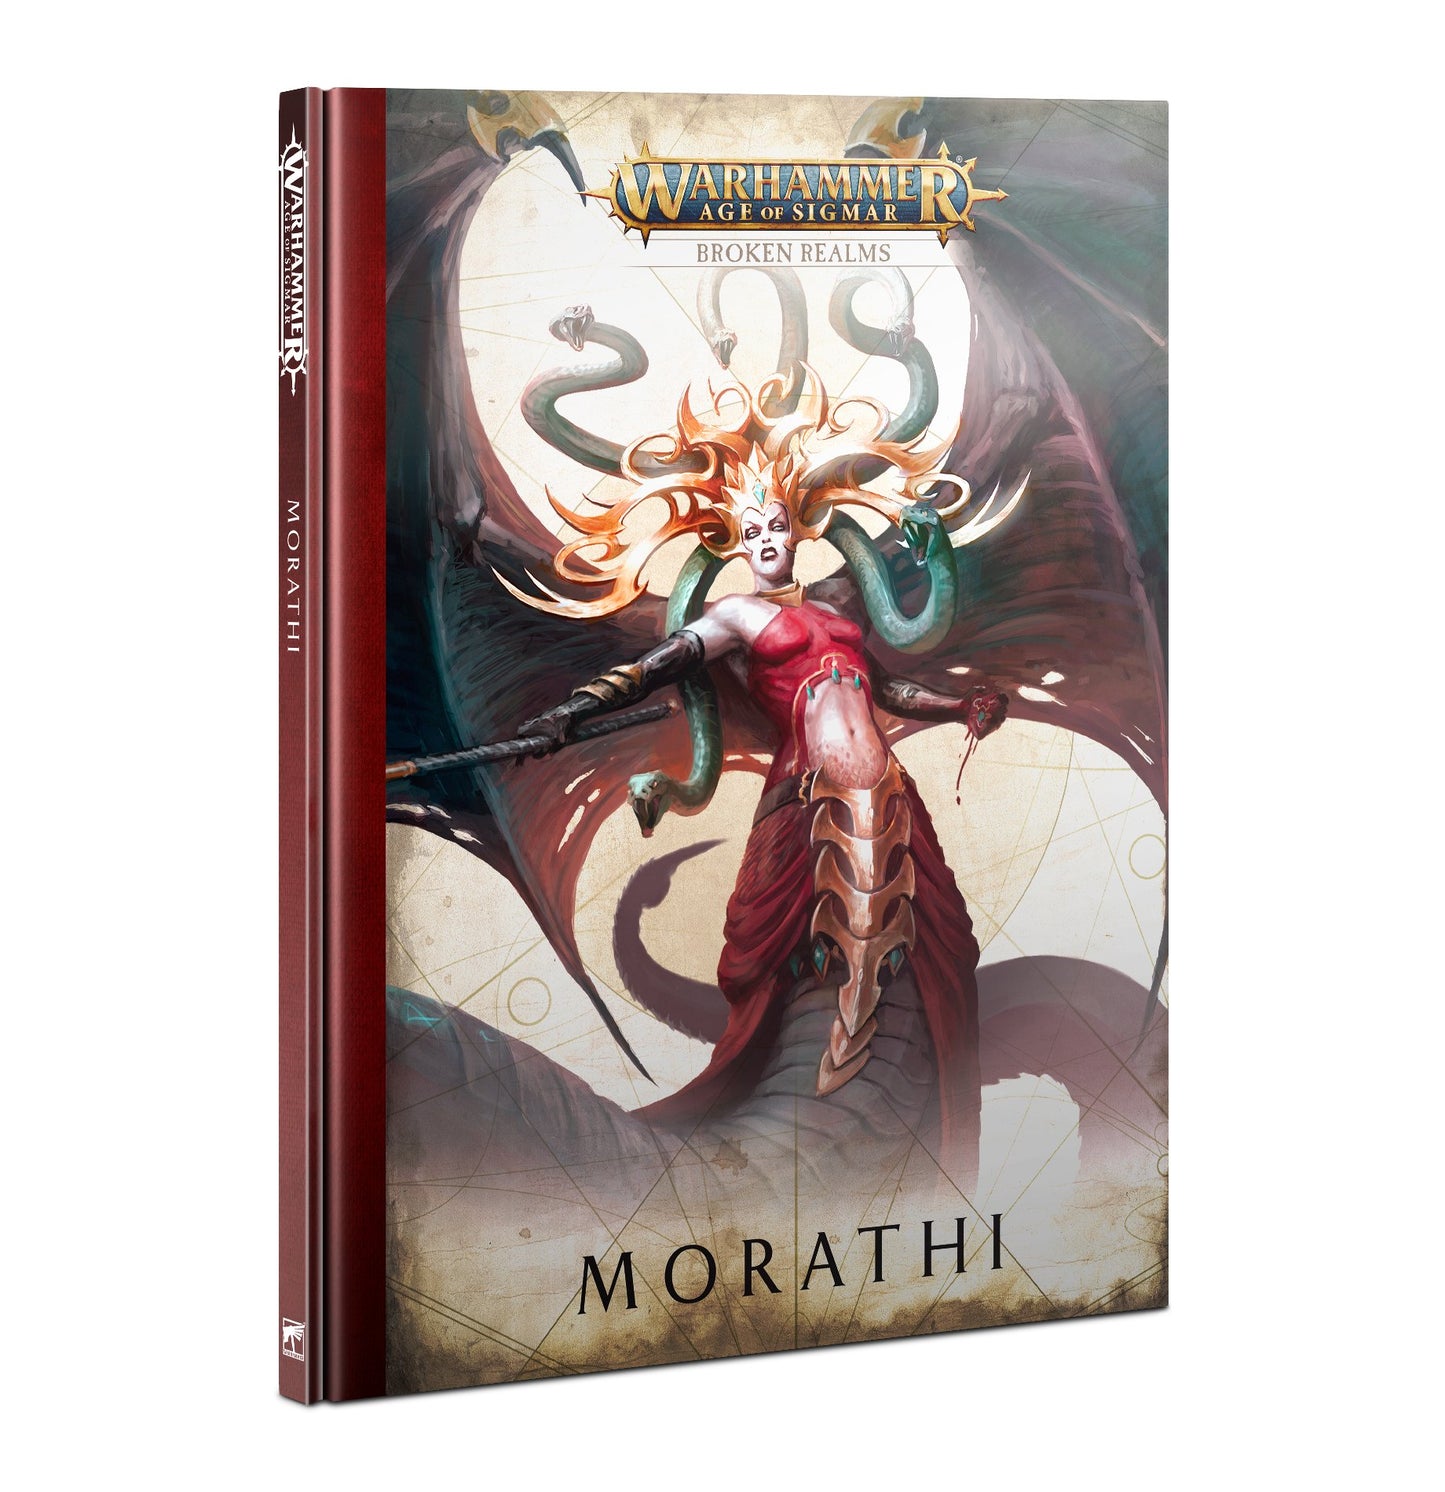 Warhammer Age of sigmar: Morathi Broken Realms book